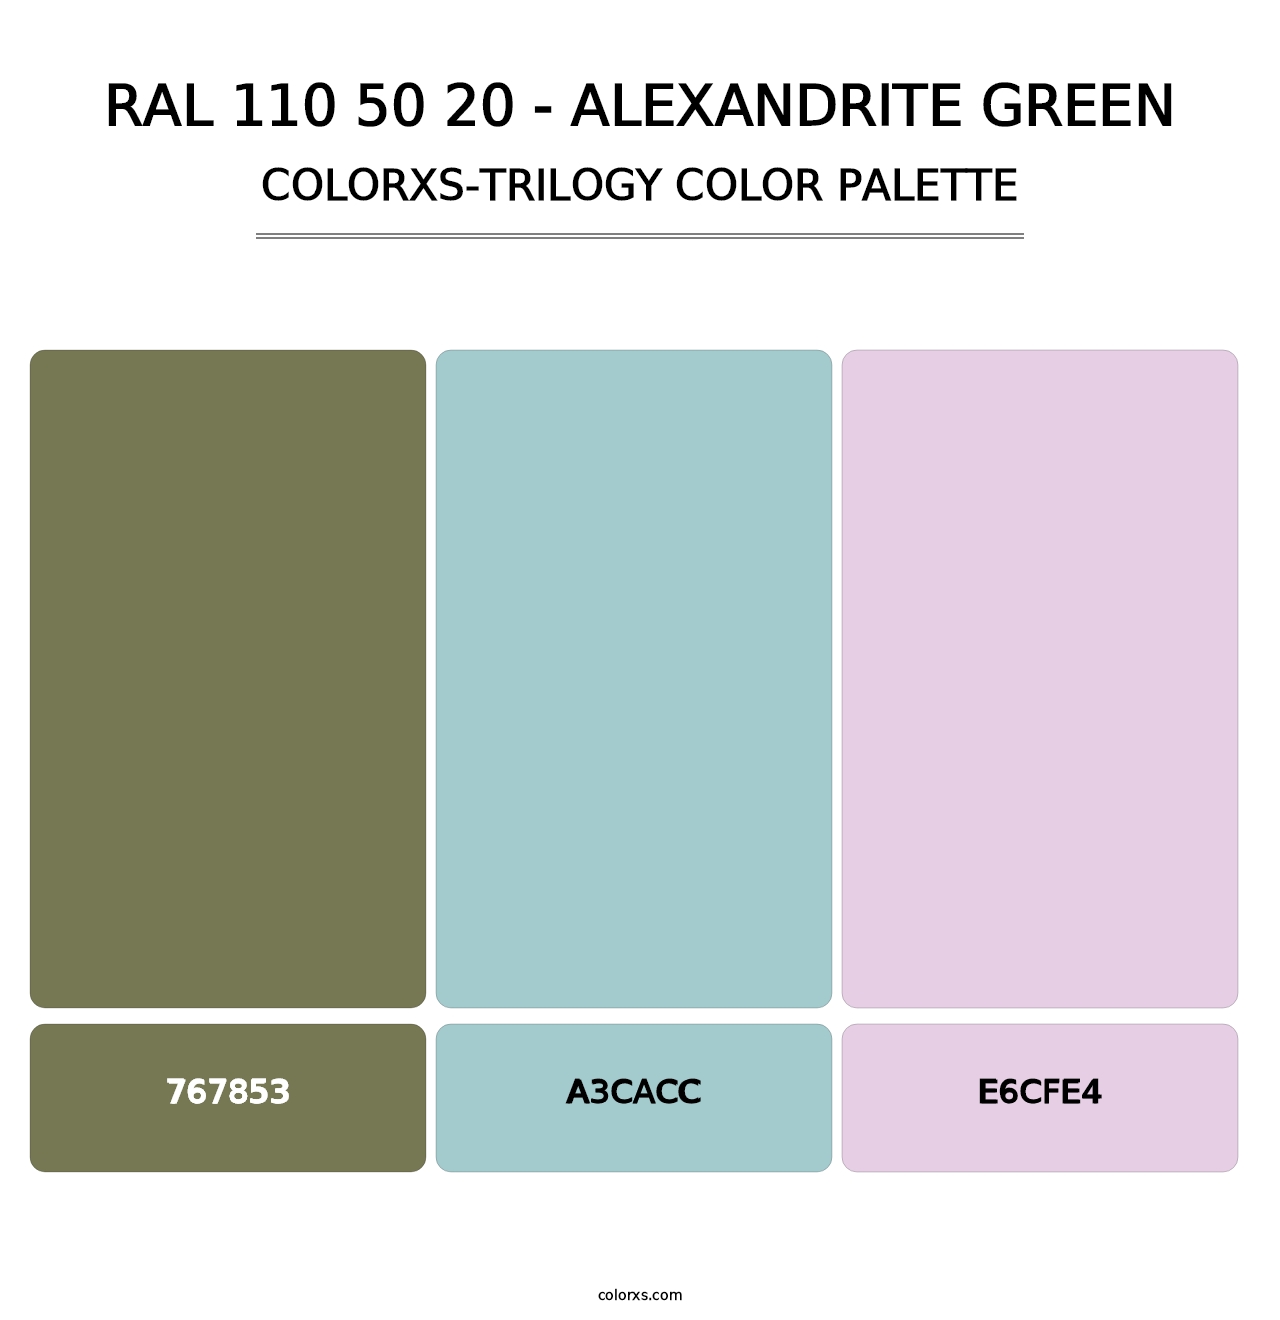 RAL 110 50 20 - Alexandrite Green - Colorxs Trilogy Palette